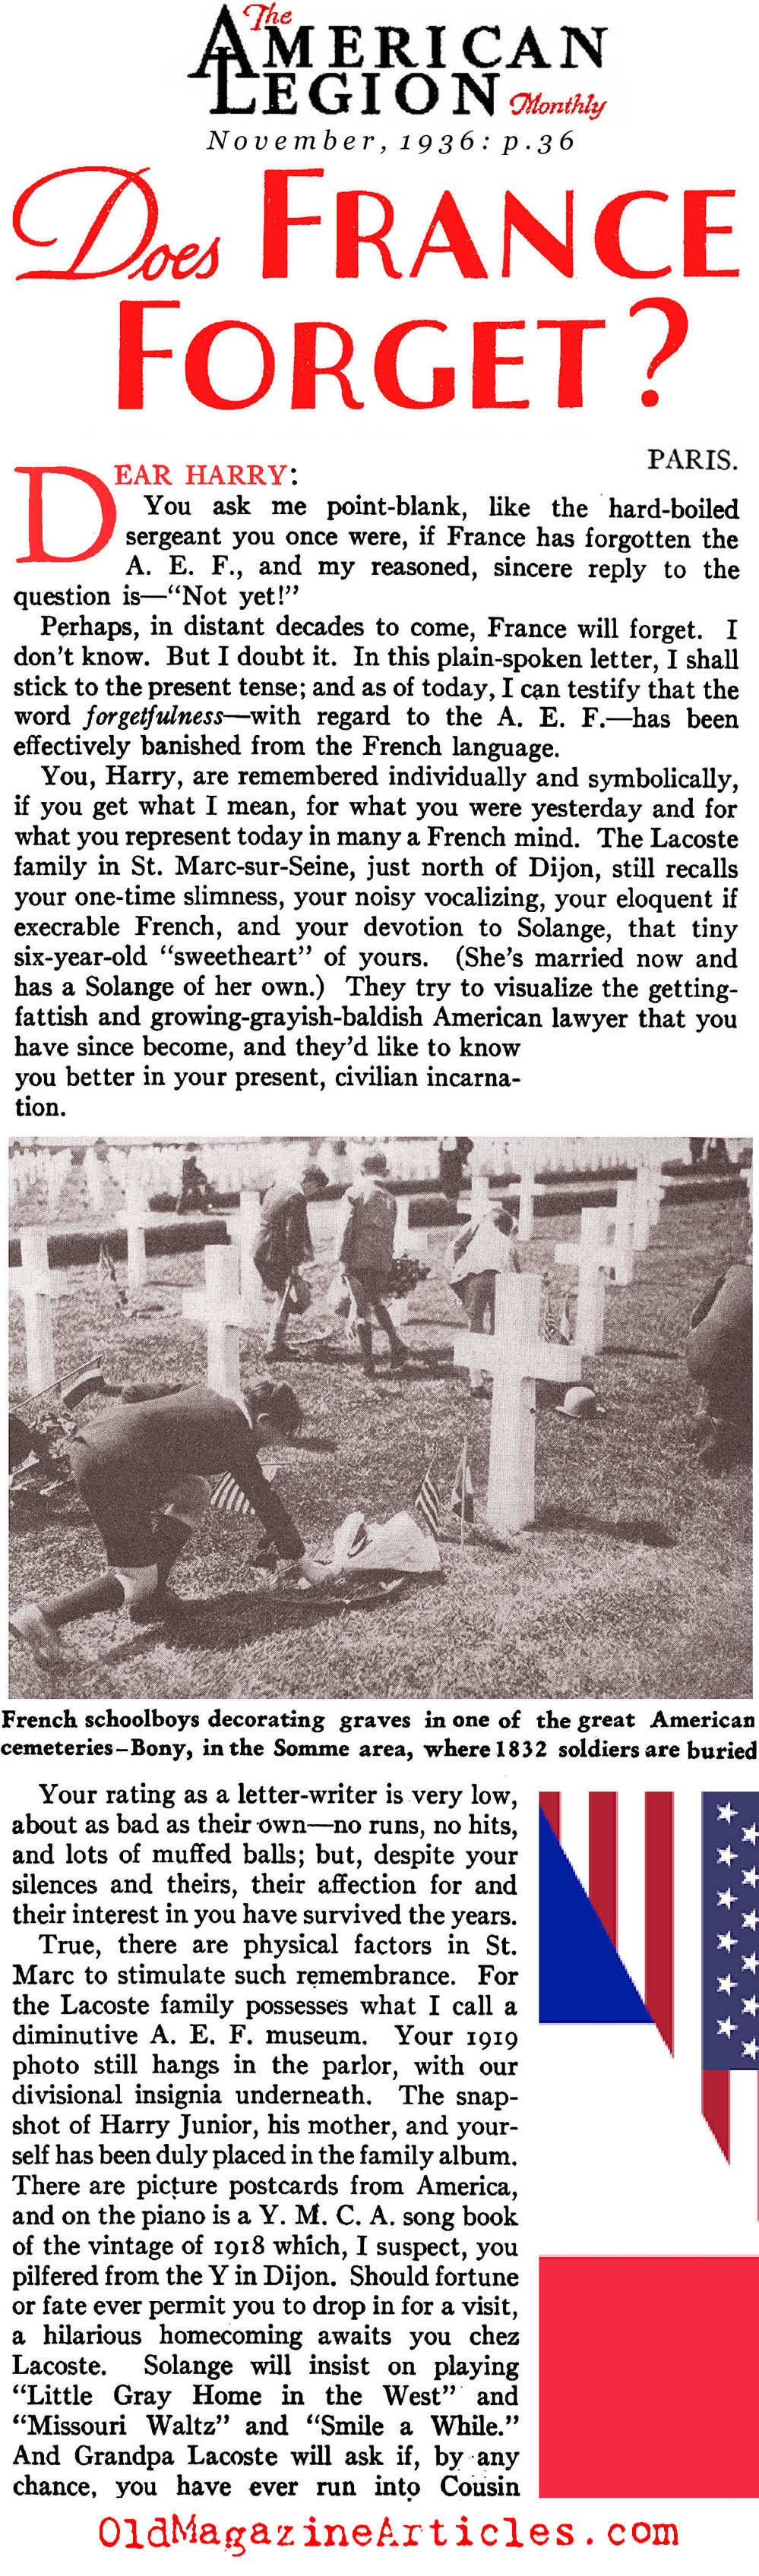 ''Thanks, America'': French Gratitude<BR> (American Legion Monthly, 1936)